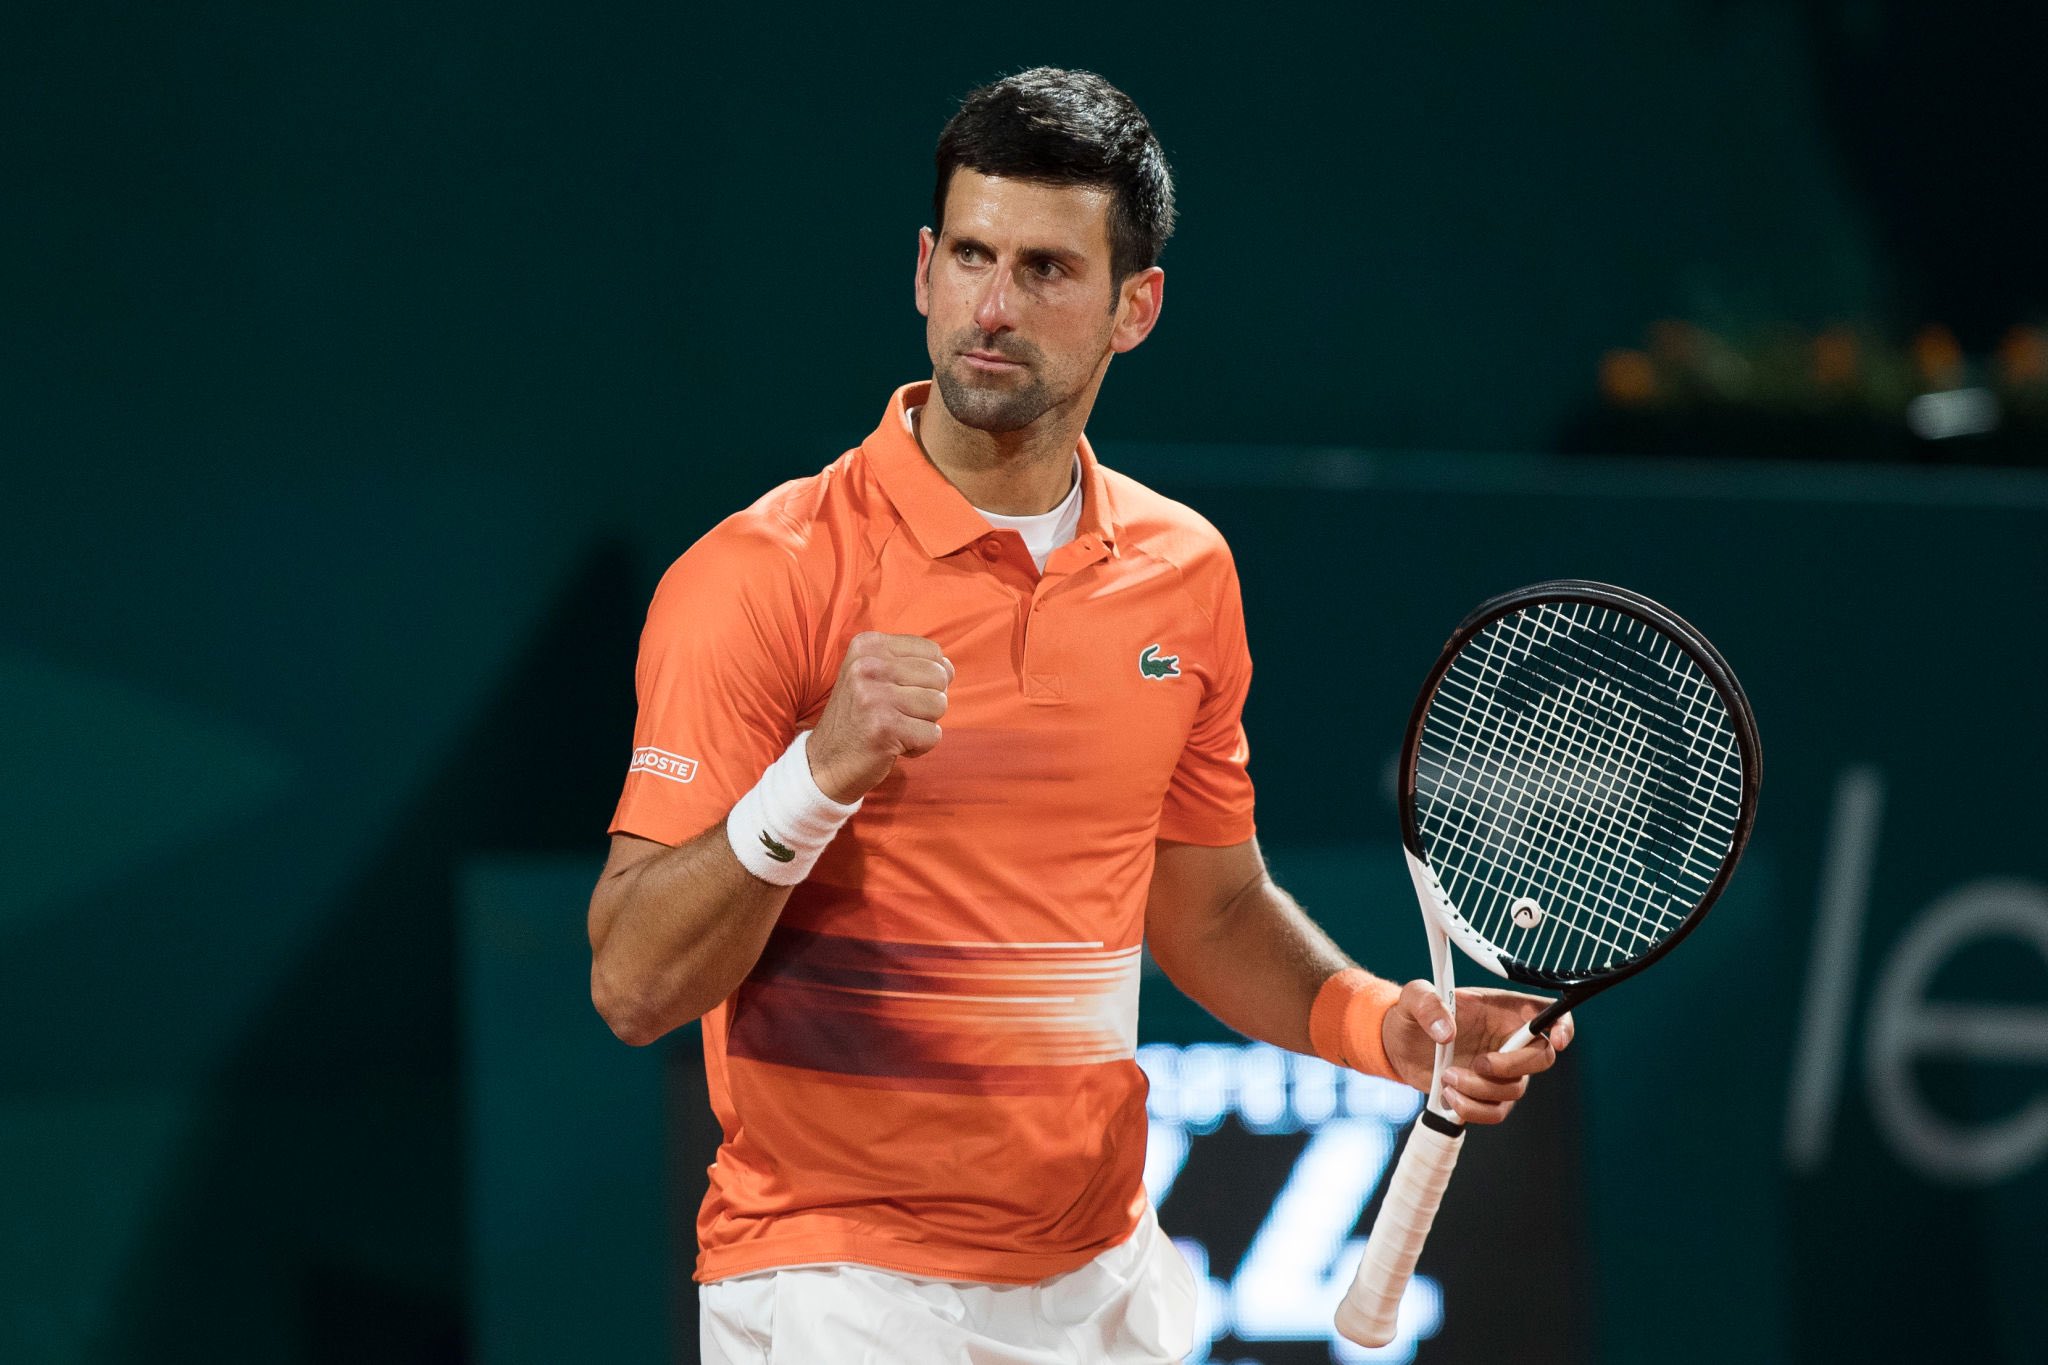 Serbia Open SEMIFINALS LIVE: Comeback King Novak Djokovic to play Russian Karen Khachanov for FINALS ahead of French Open- Follow Djokovic vs Khachanov LIVE